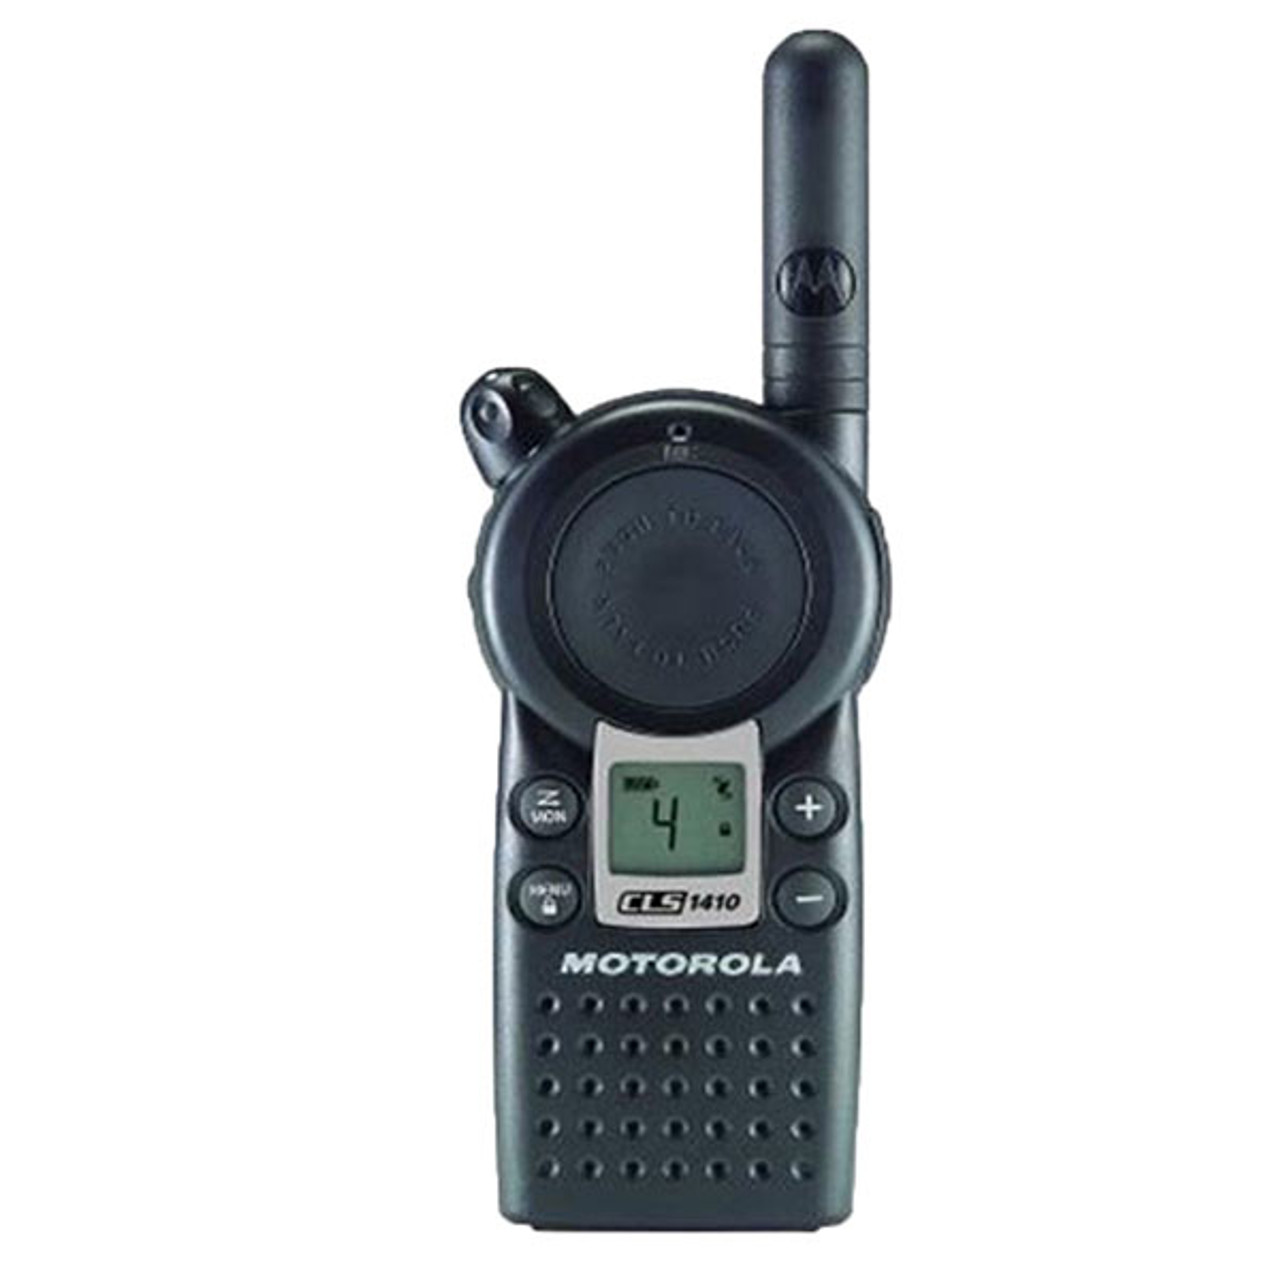 Buy 6 Get One Free!! Motorola CLS1410 UHF Business Two-way Radio 